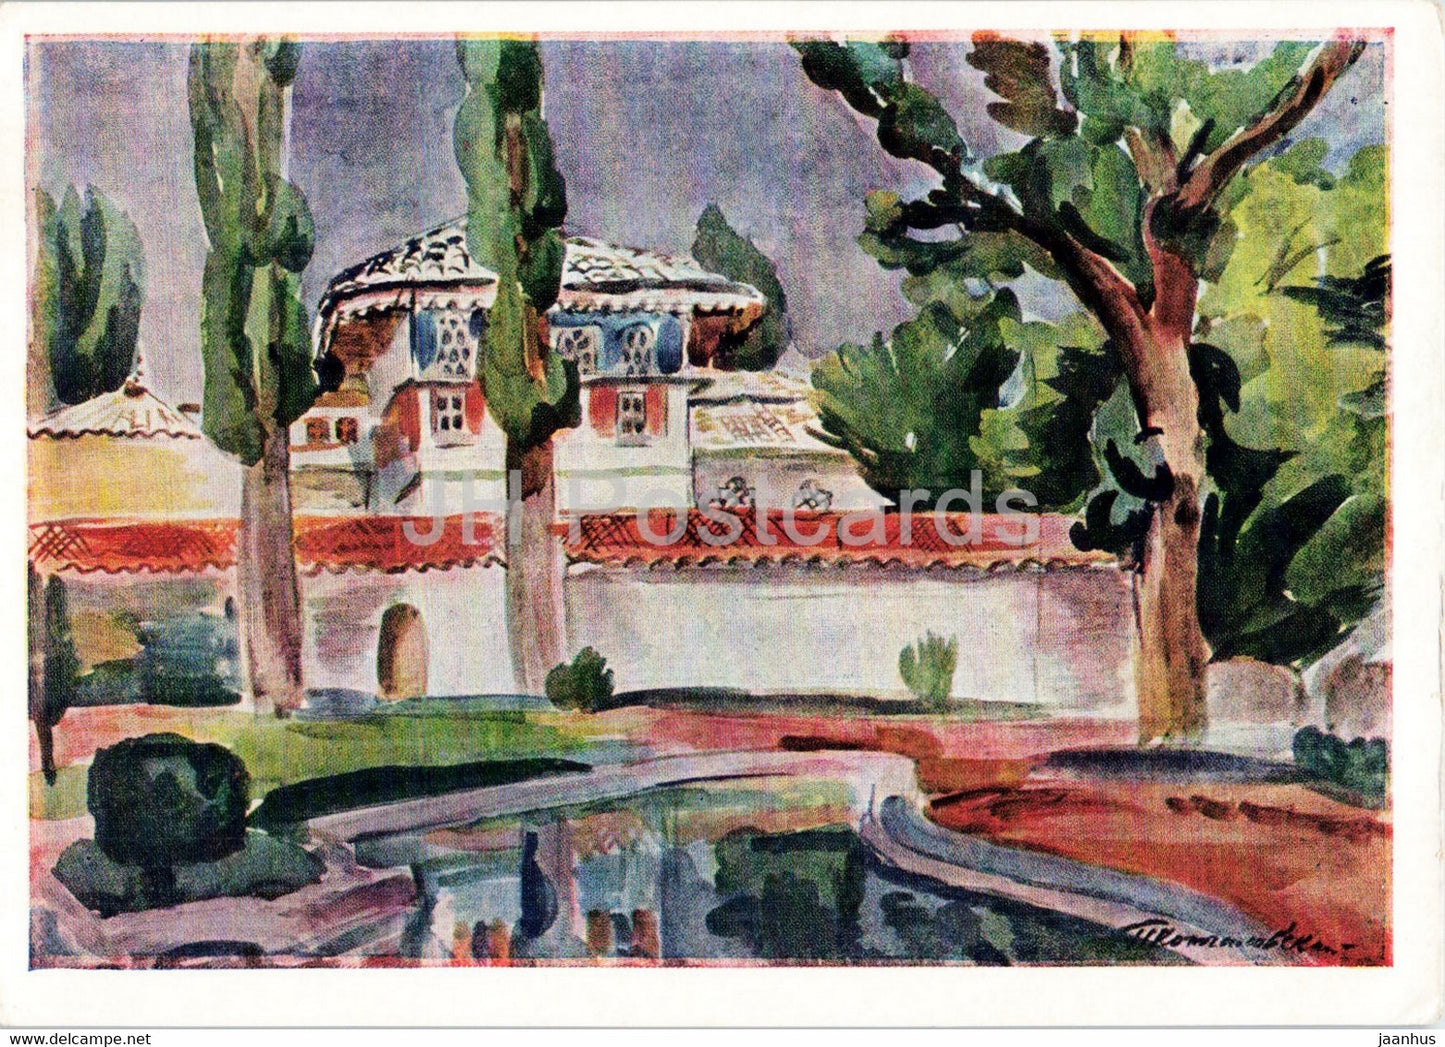 painting by P. Konchalovsky - Bakhchysarai - Crimea - Russian art - 1961 - Russia USSR - unused - JH Postcards